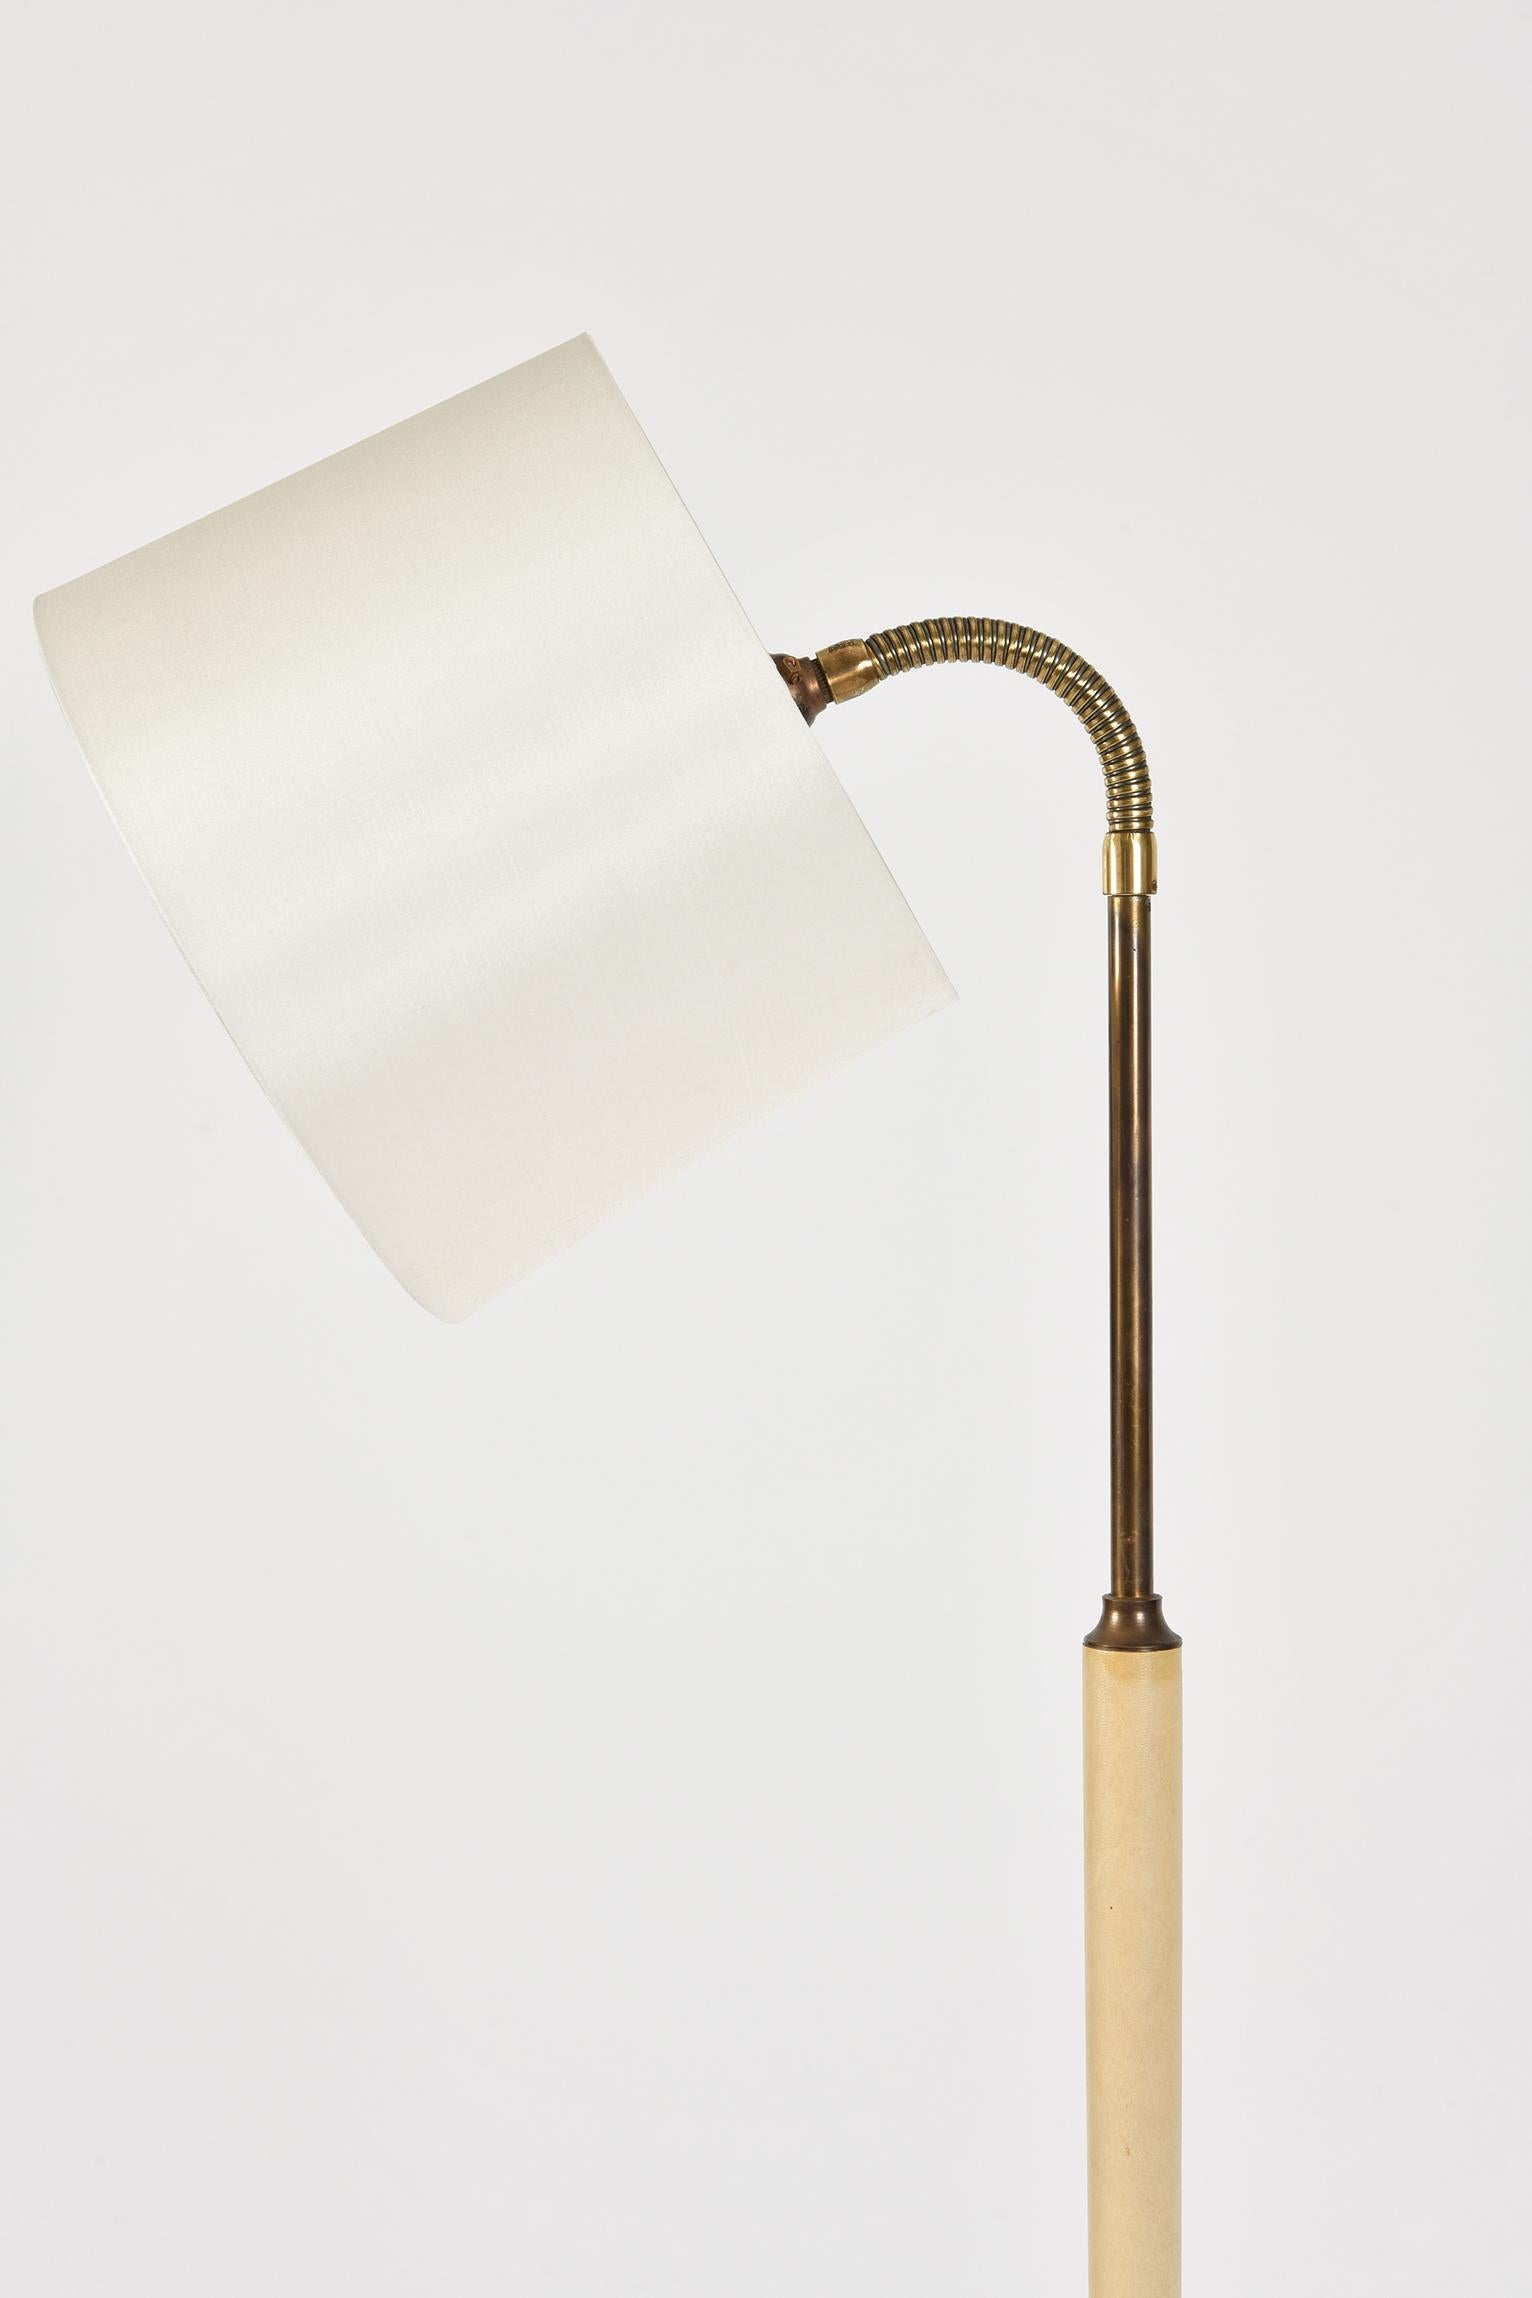 Swedish Rare Midcentury Brass and Cream Leather Floor Lamp